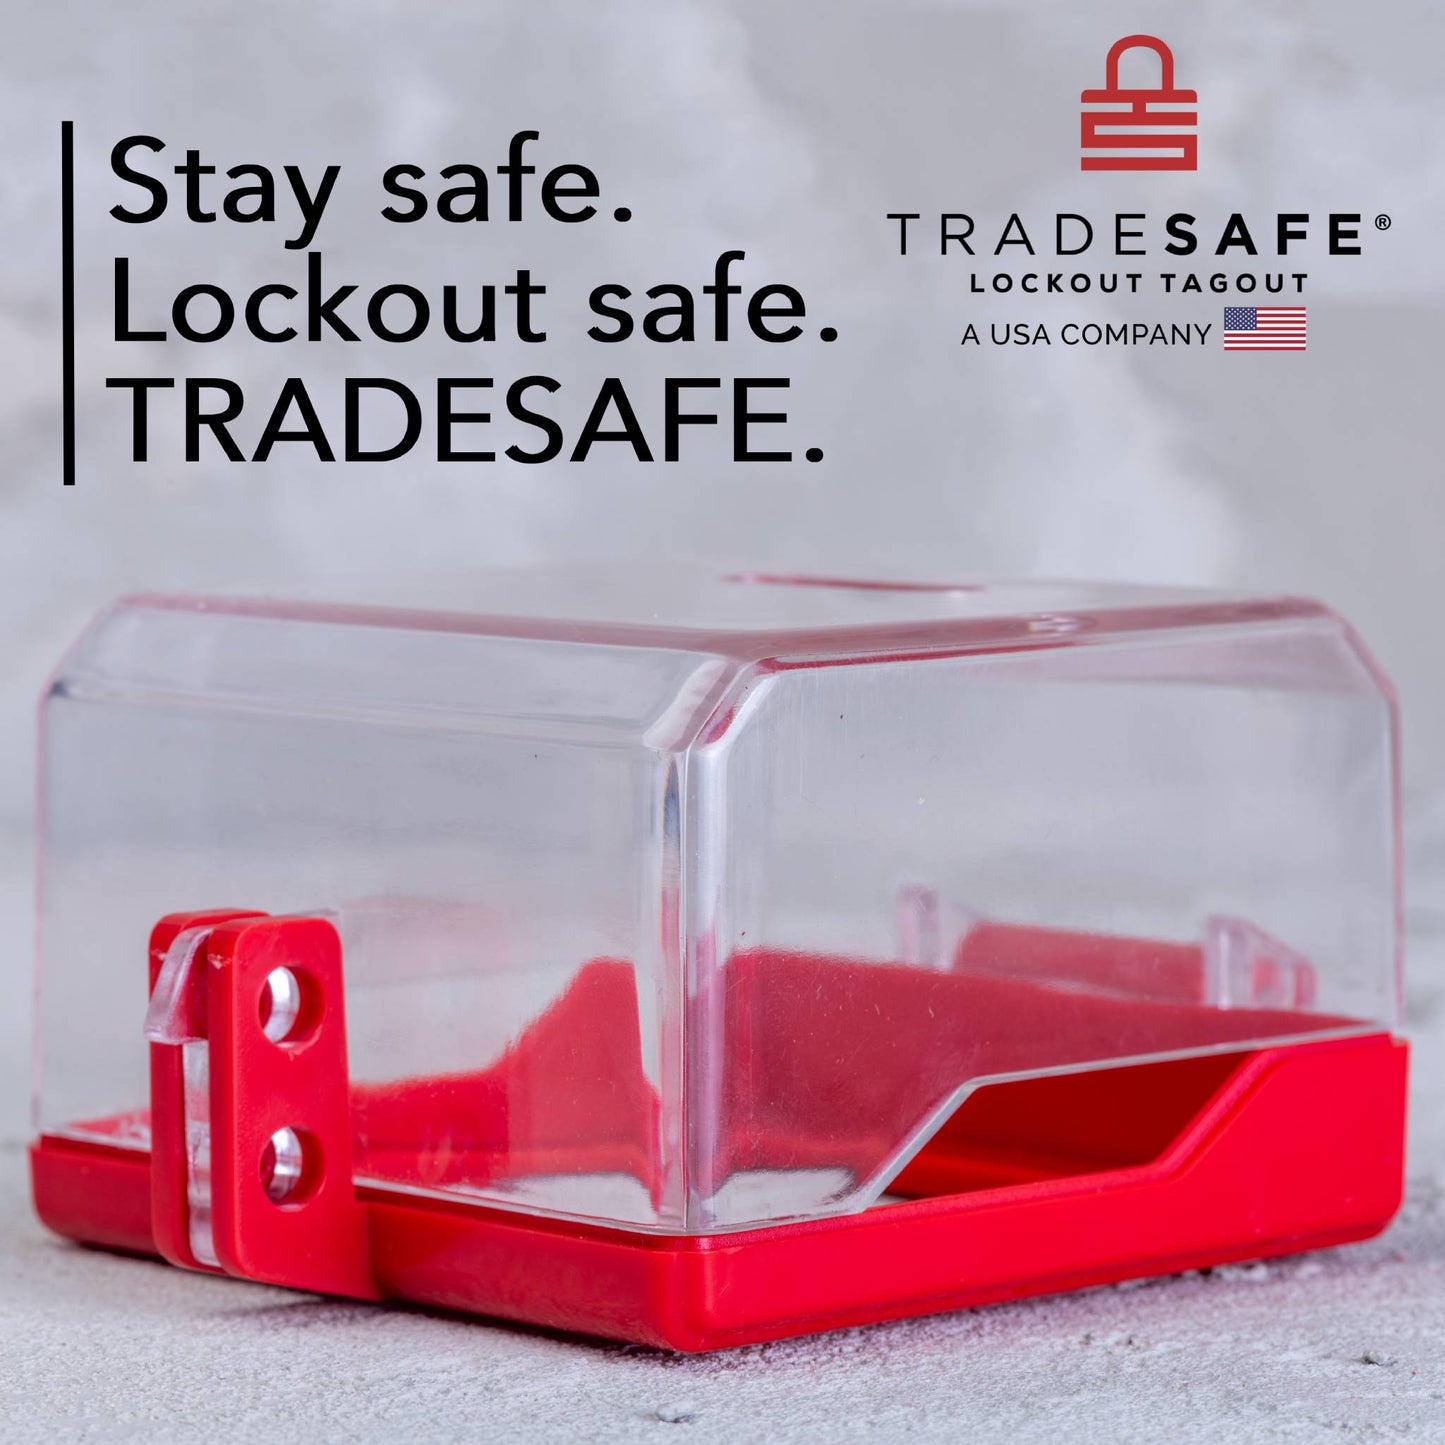 lockout tagout emergency stop button cover brand image; stay safe lockout safe tradesafe